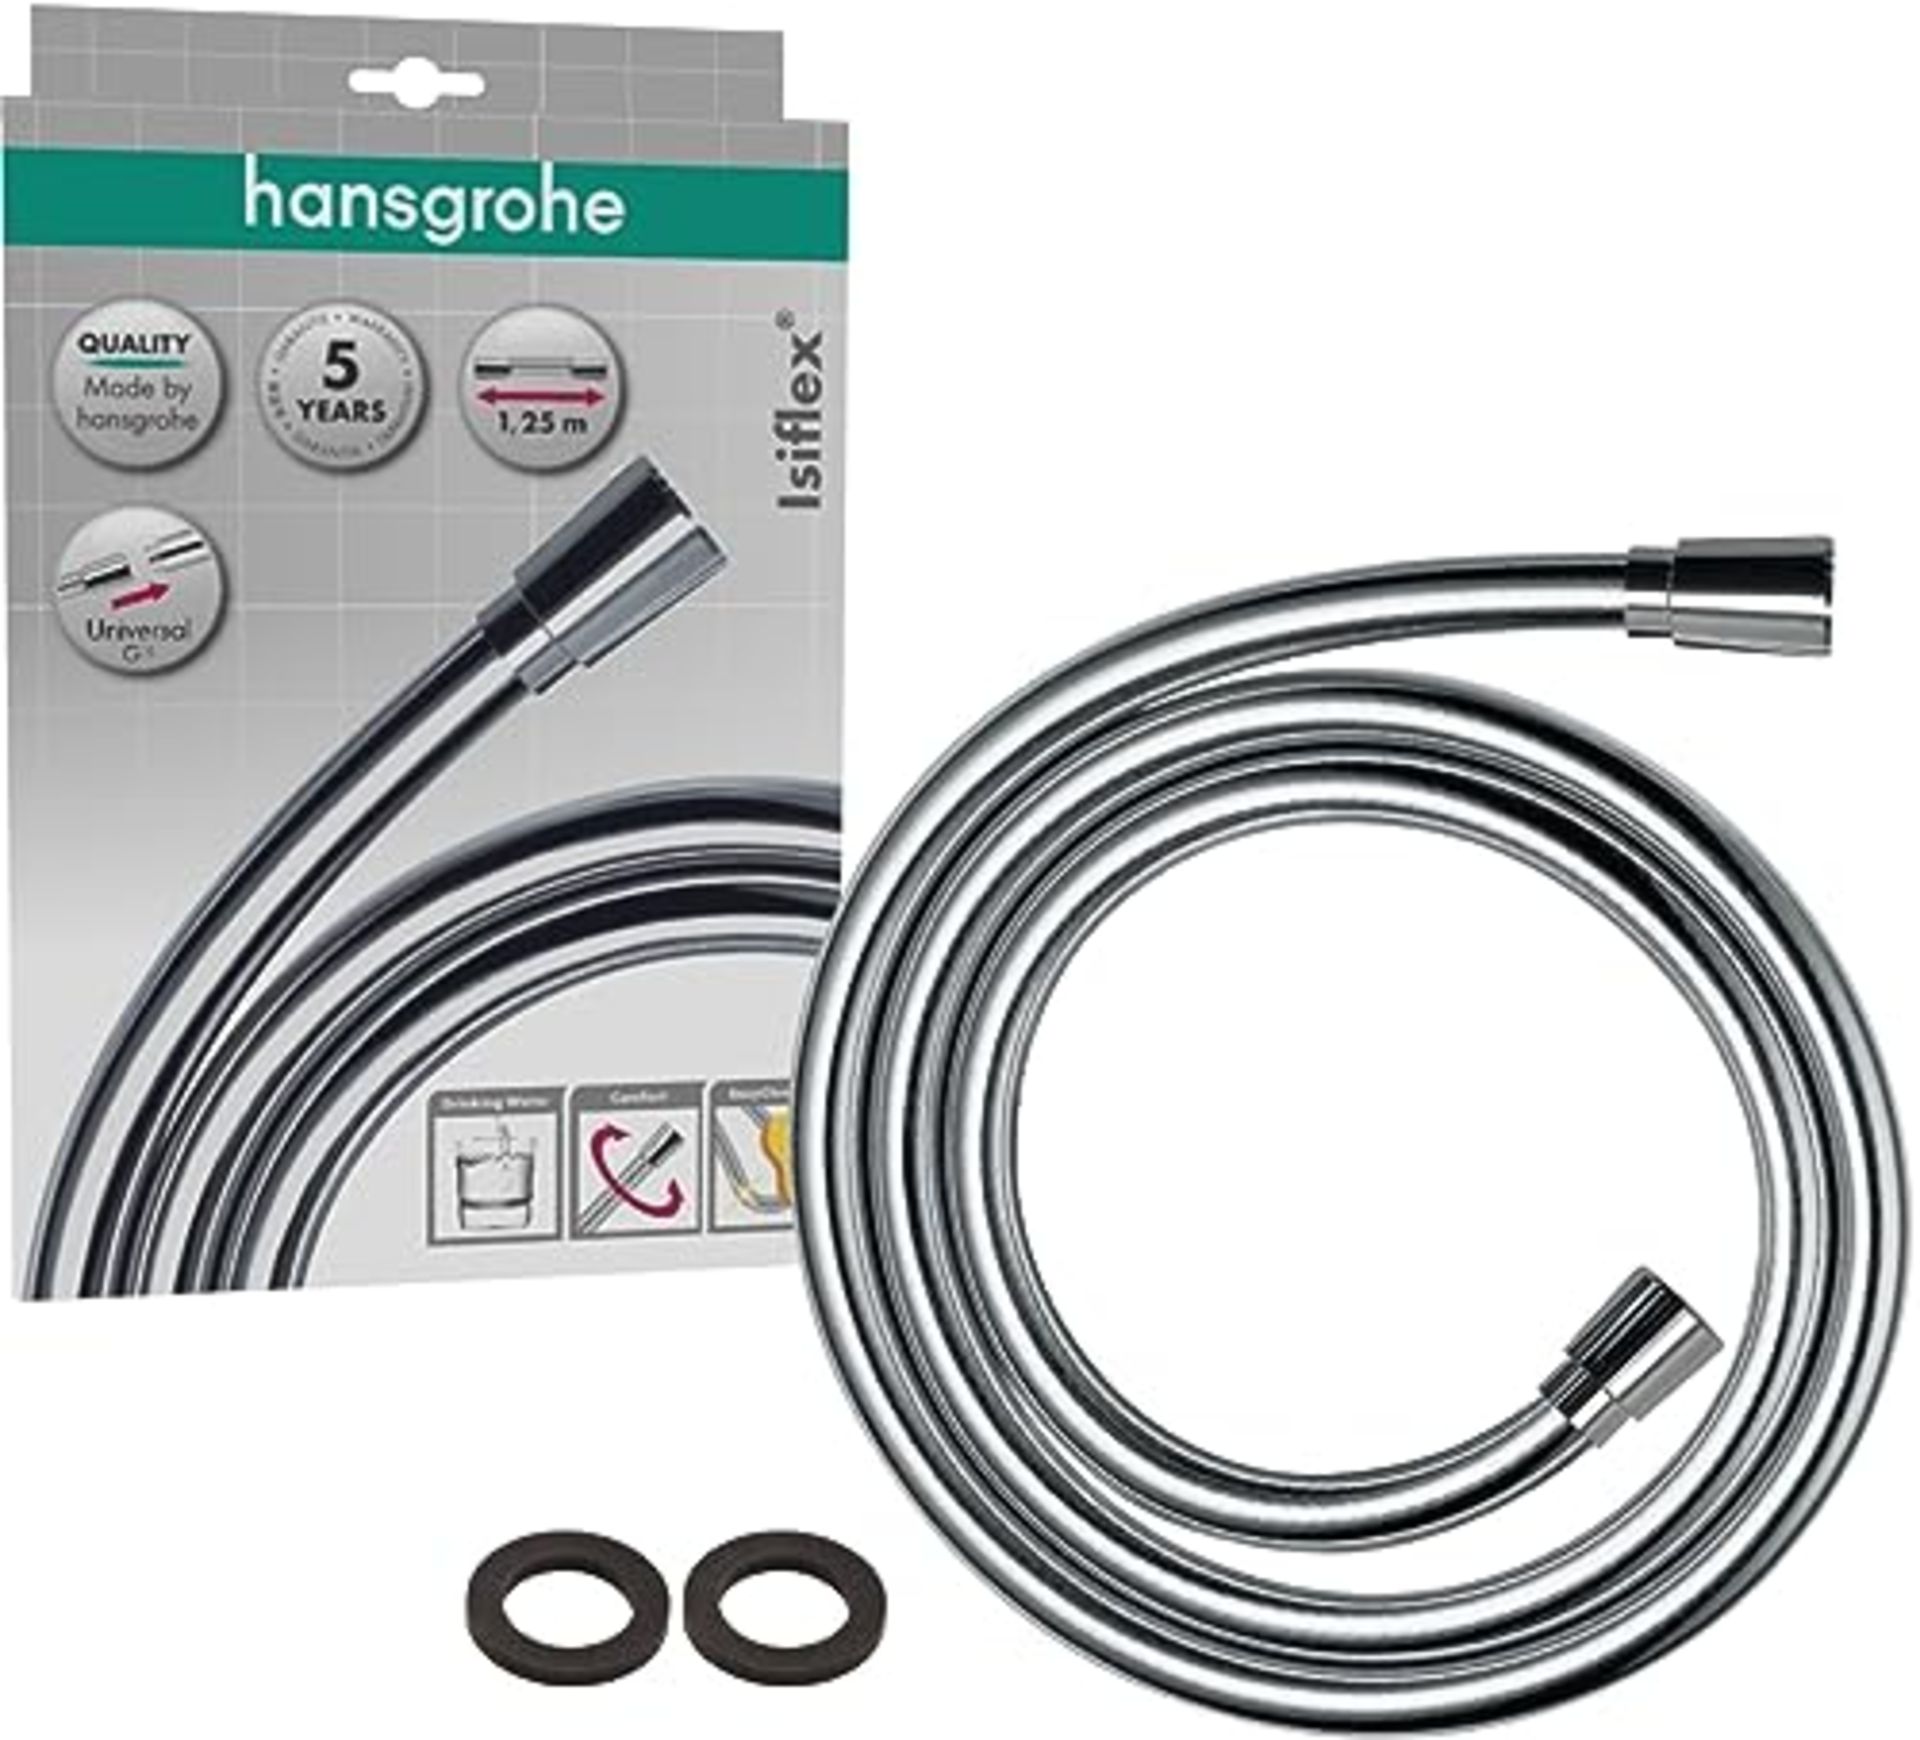 hansgrohe Isiflex Shower Hose 1,25 m, Anti-kink and Tangle free, Chrome, 28272000